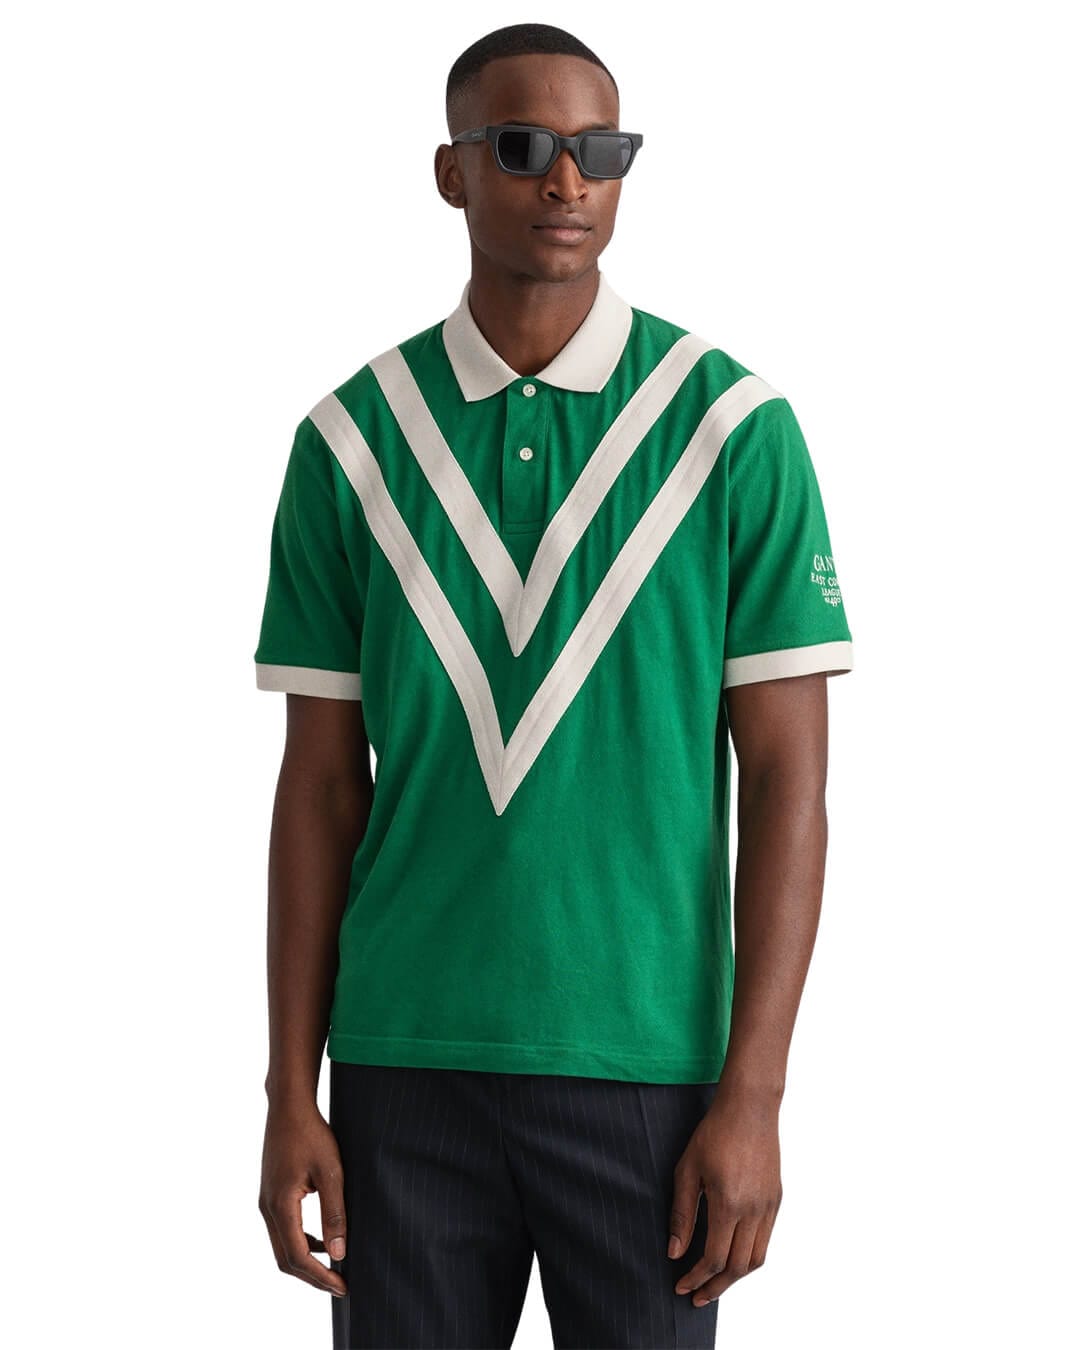 Gant Polo Shirts Gant Rowing Jersey Bright Green Polo Shirt